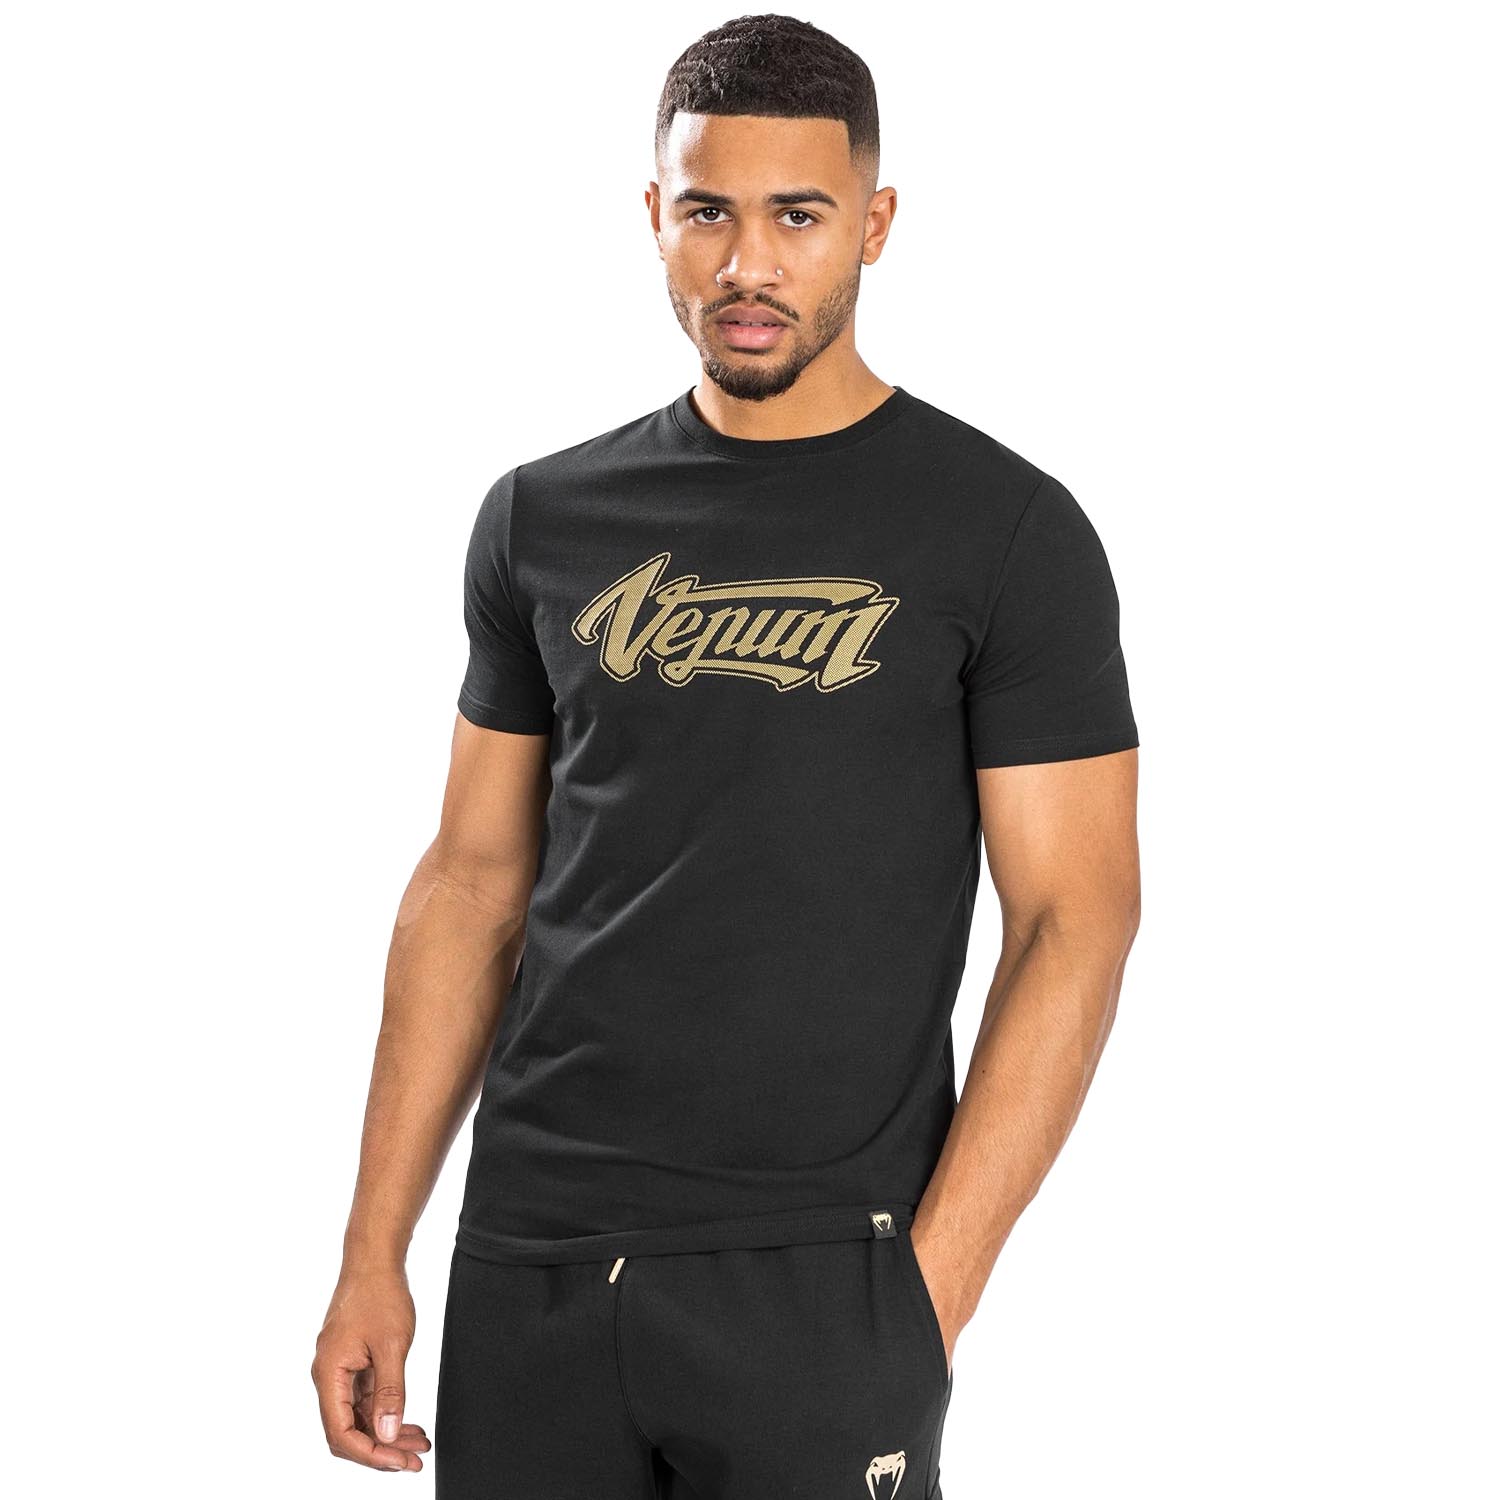 VENUM T-Shirt, Absolute 2.0, black-gold